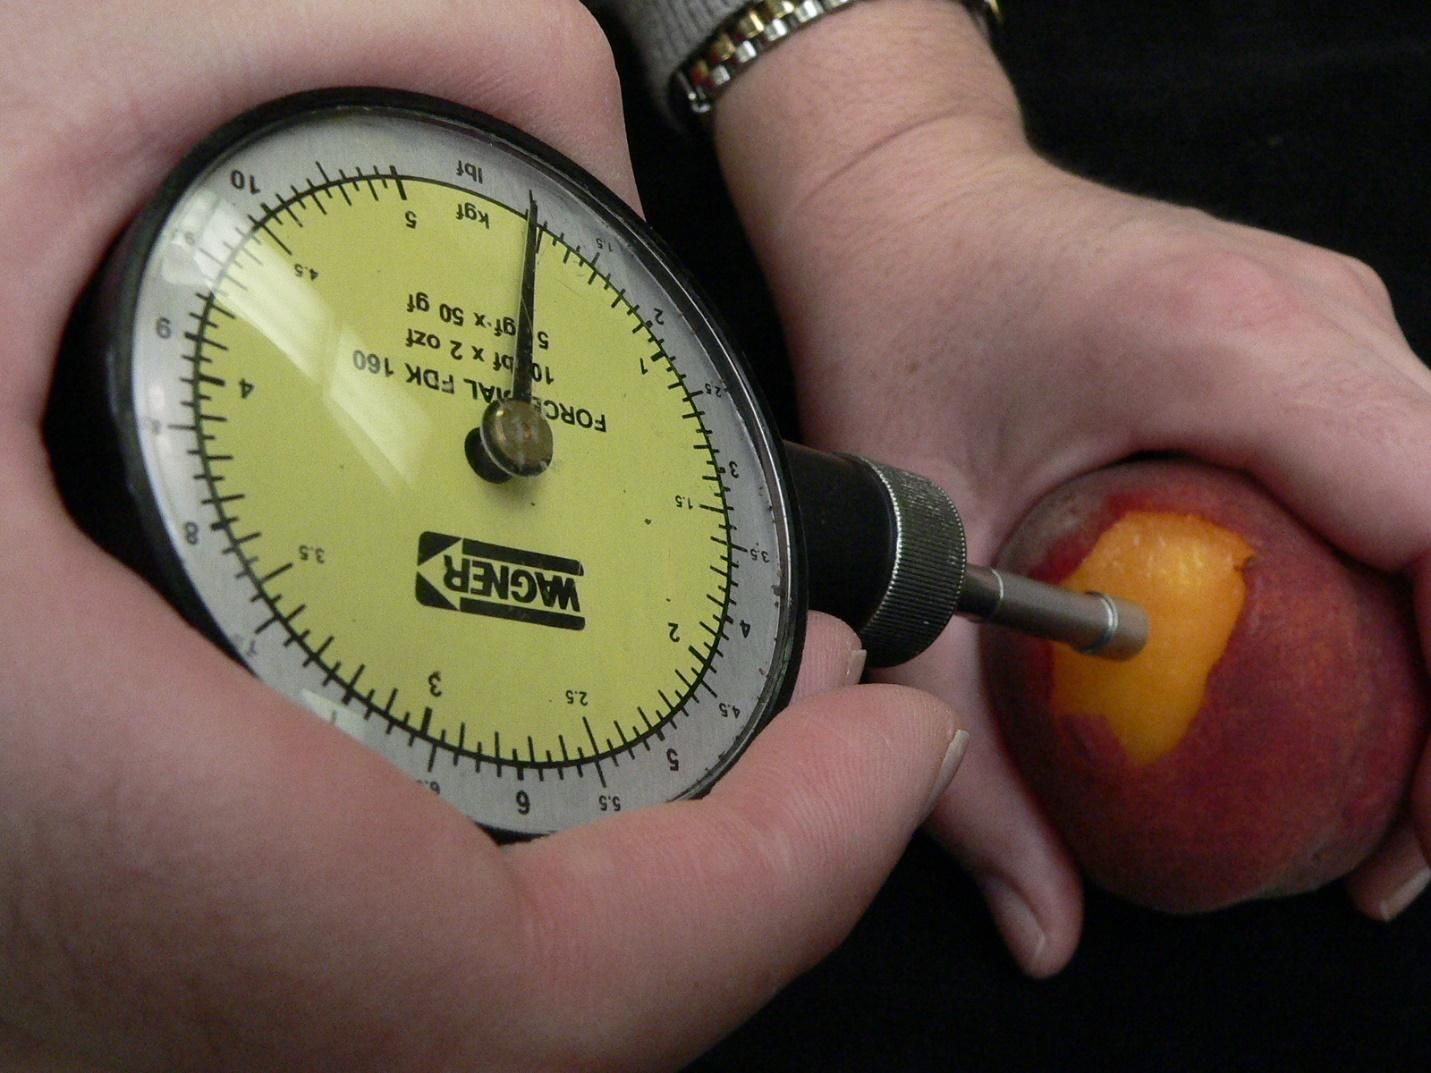 Measuring peach flesh firmness using a hand-held penetrometer. 